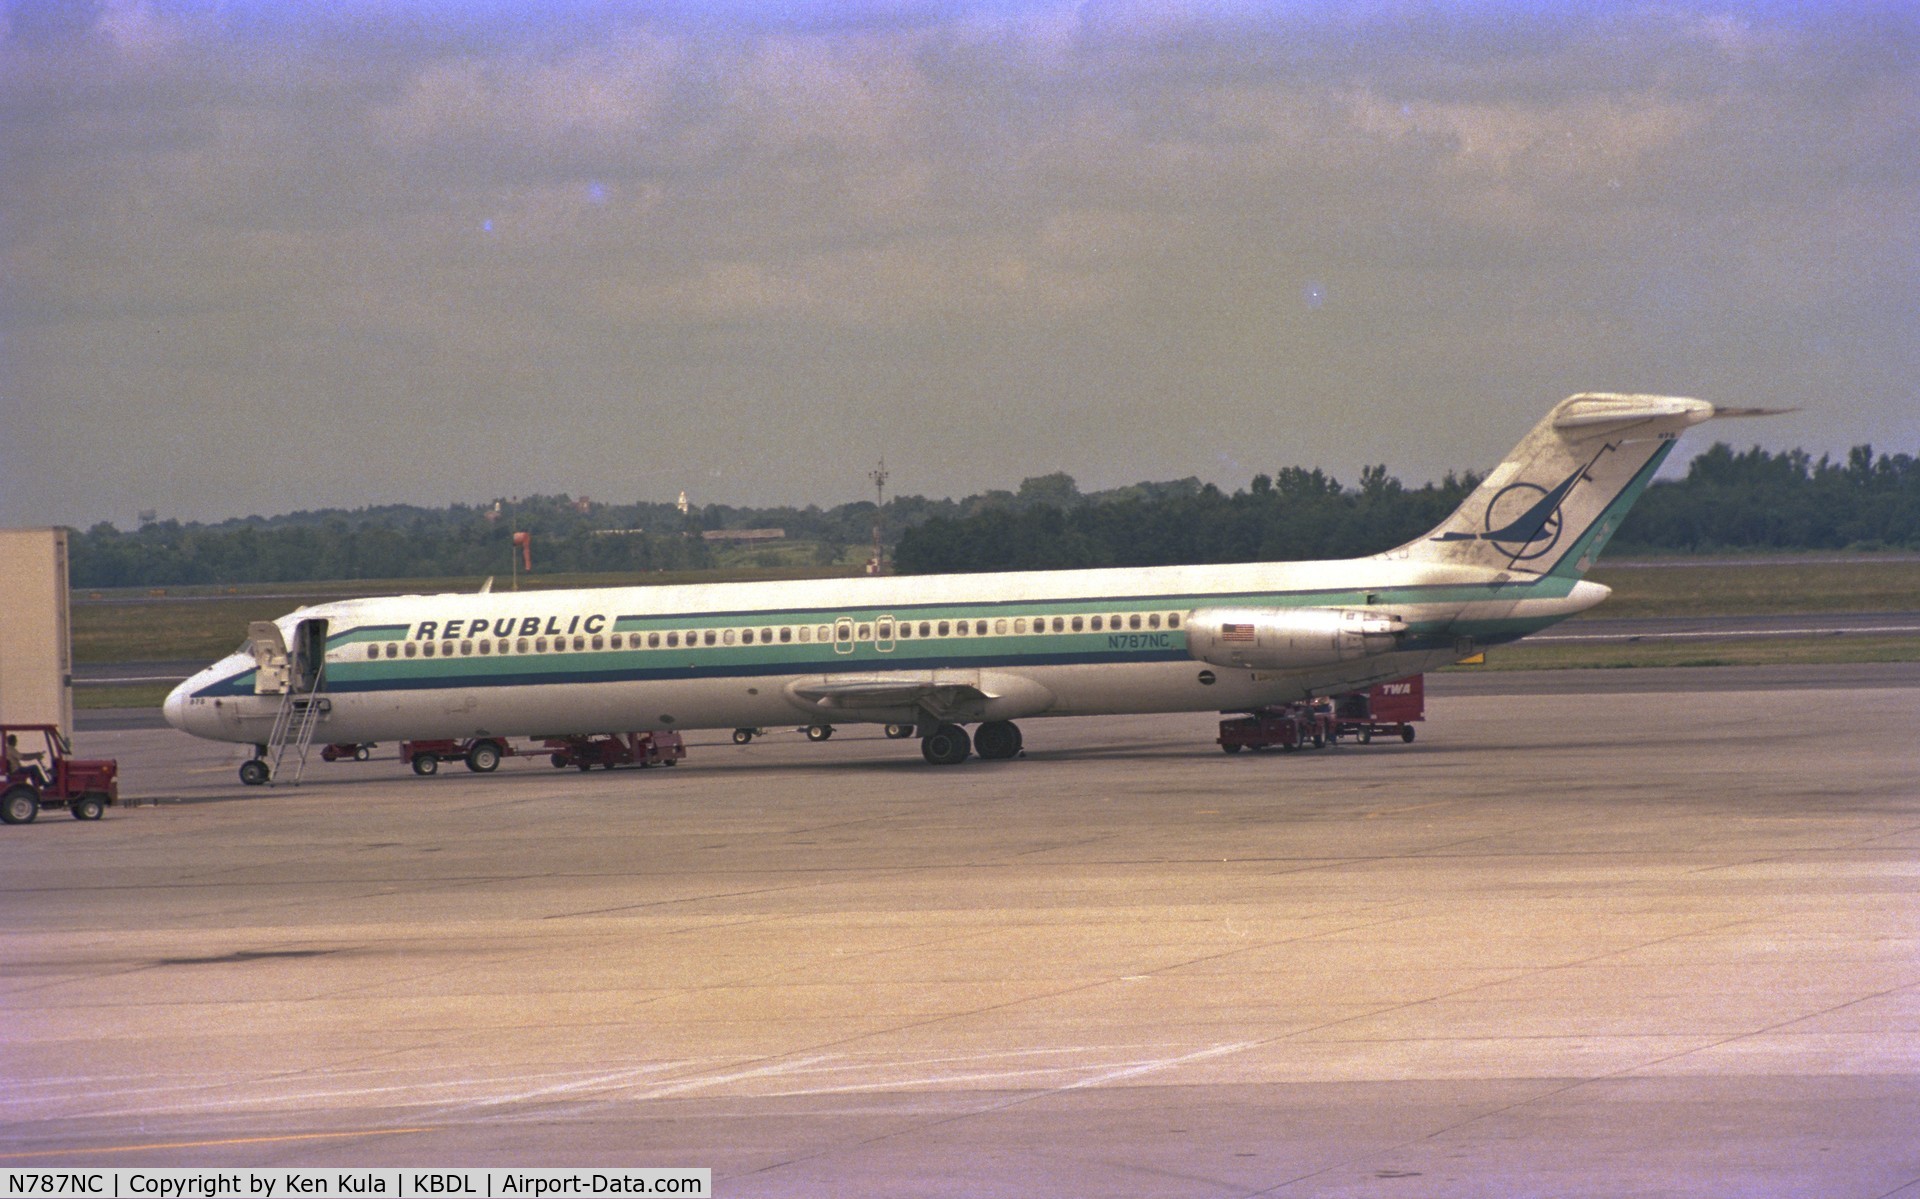 N787NC, 1980 McDonnell Douglas DC-9-51 C/N 48149, N787NC Republic Airlines at KBDL